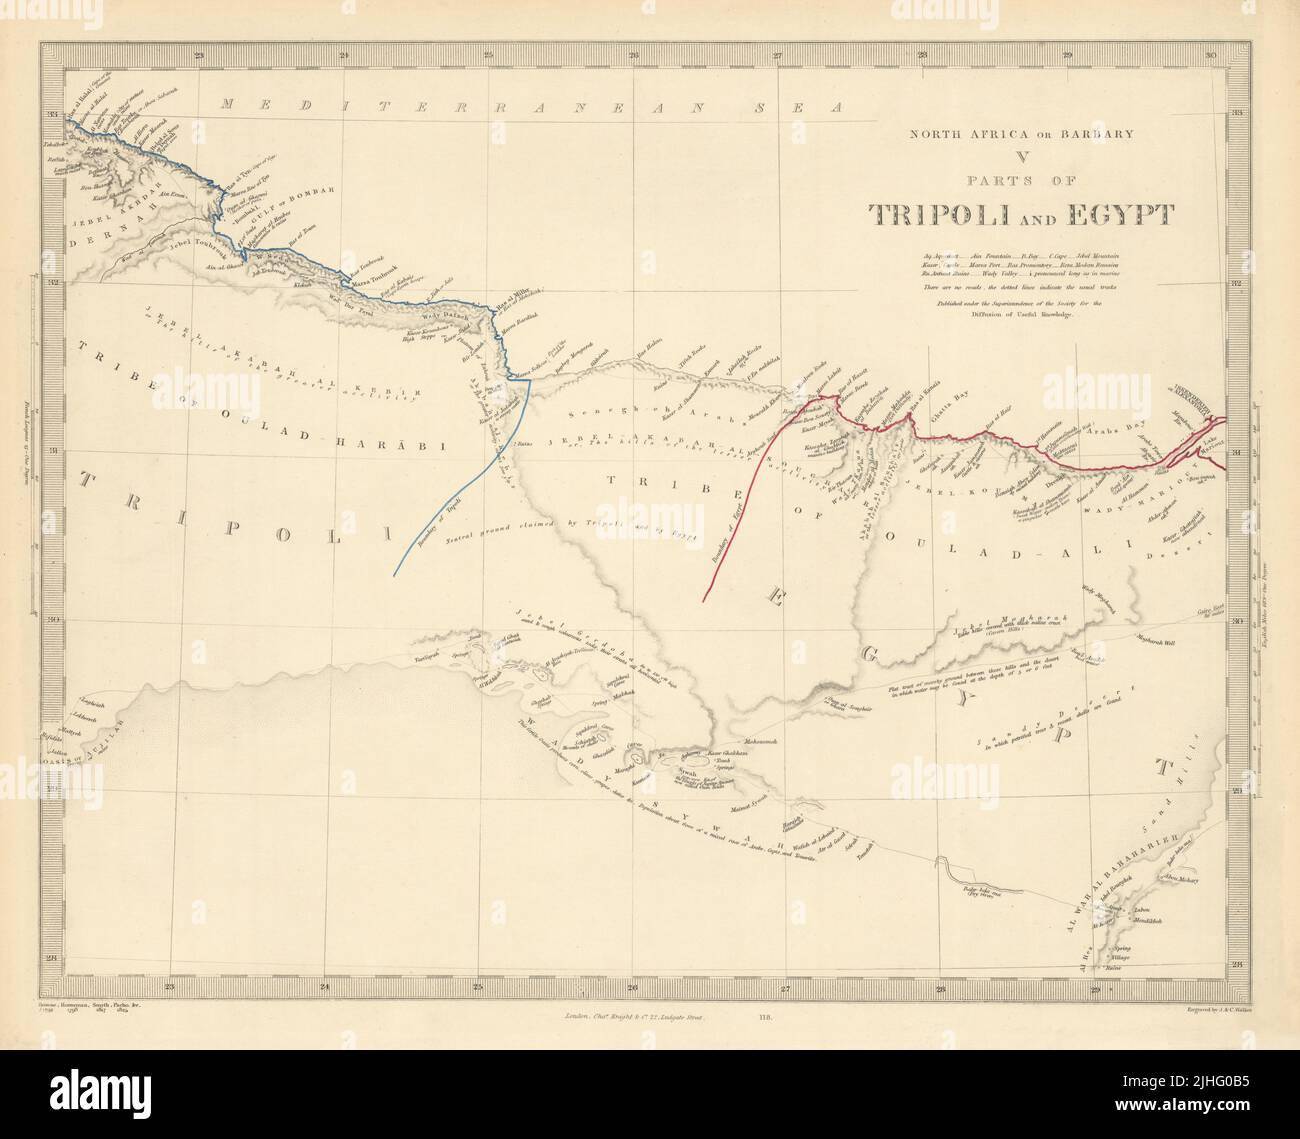 NORTE DE ÁFRICA DE BABRBARY V Partes de Trípoli y Egipto. Tribus de Libia. Mapa SDUK 1851 Foto de stock